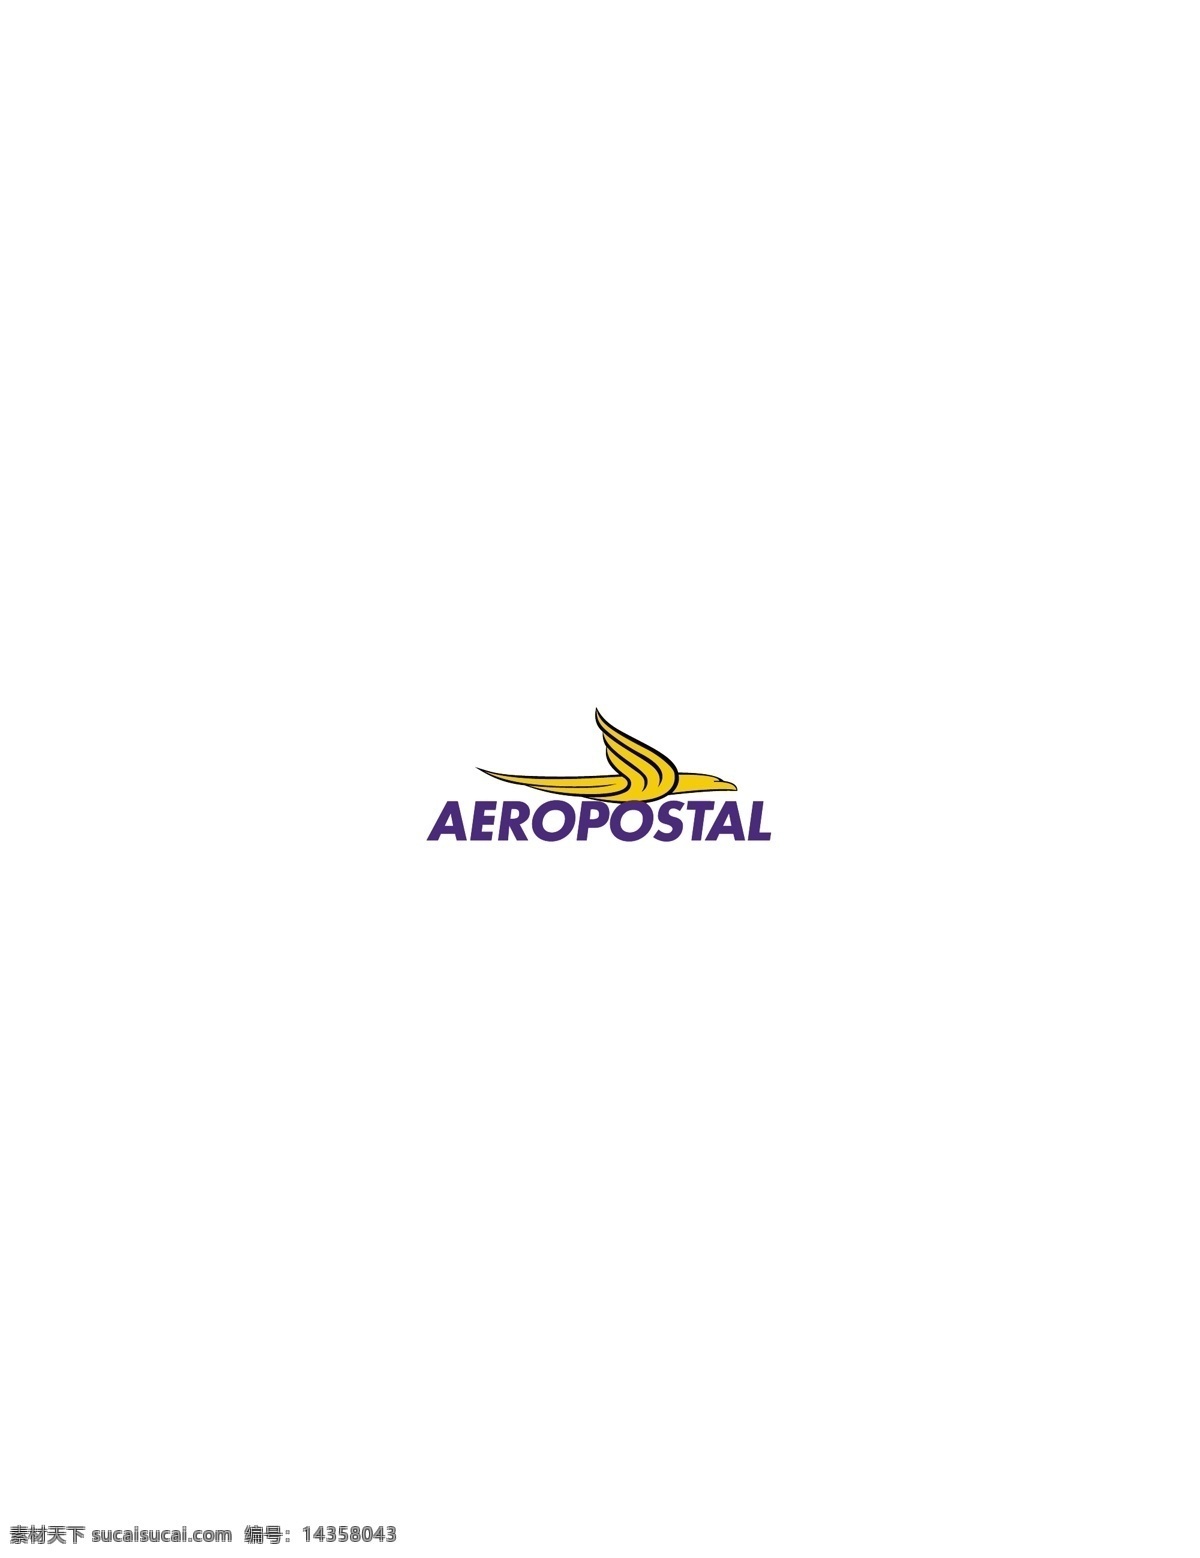 logo大全 logo 设计欣赏 商业矢量 矢量下载 aeropostal1 航空公司 标志 标志设计 欣赏 网页矢量 矢量图 其他矢量图